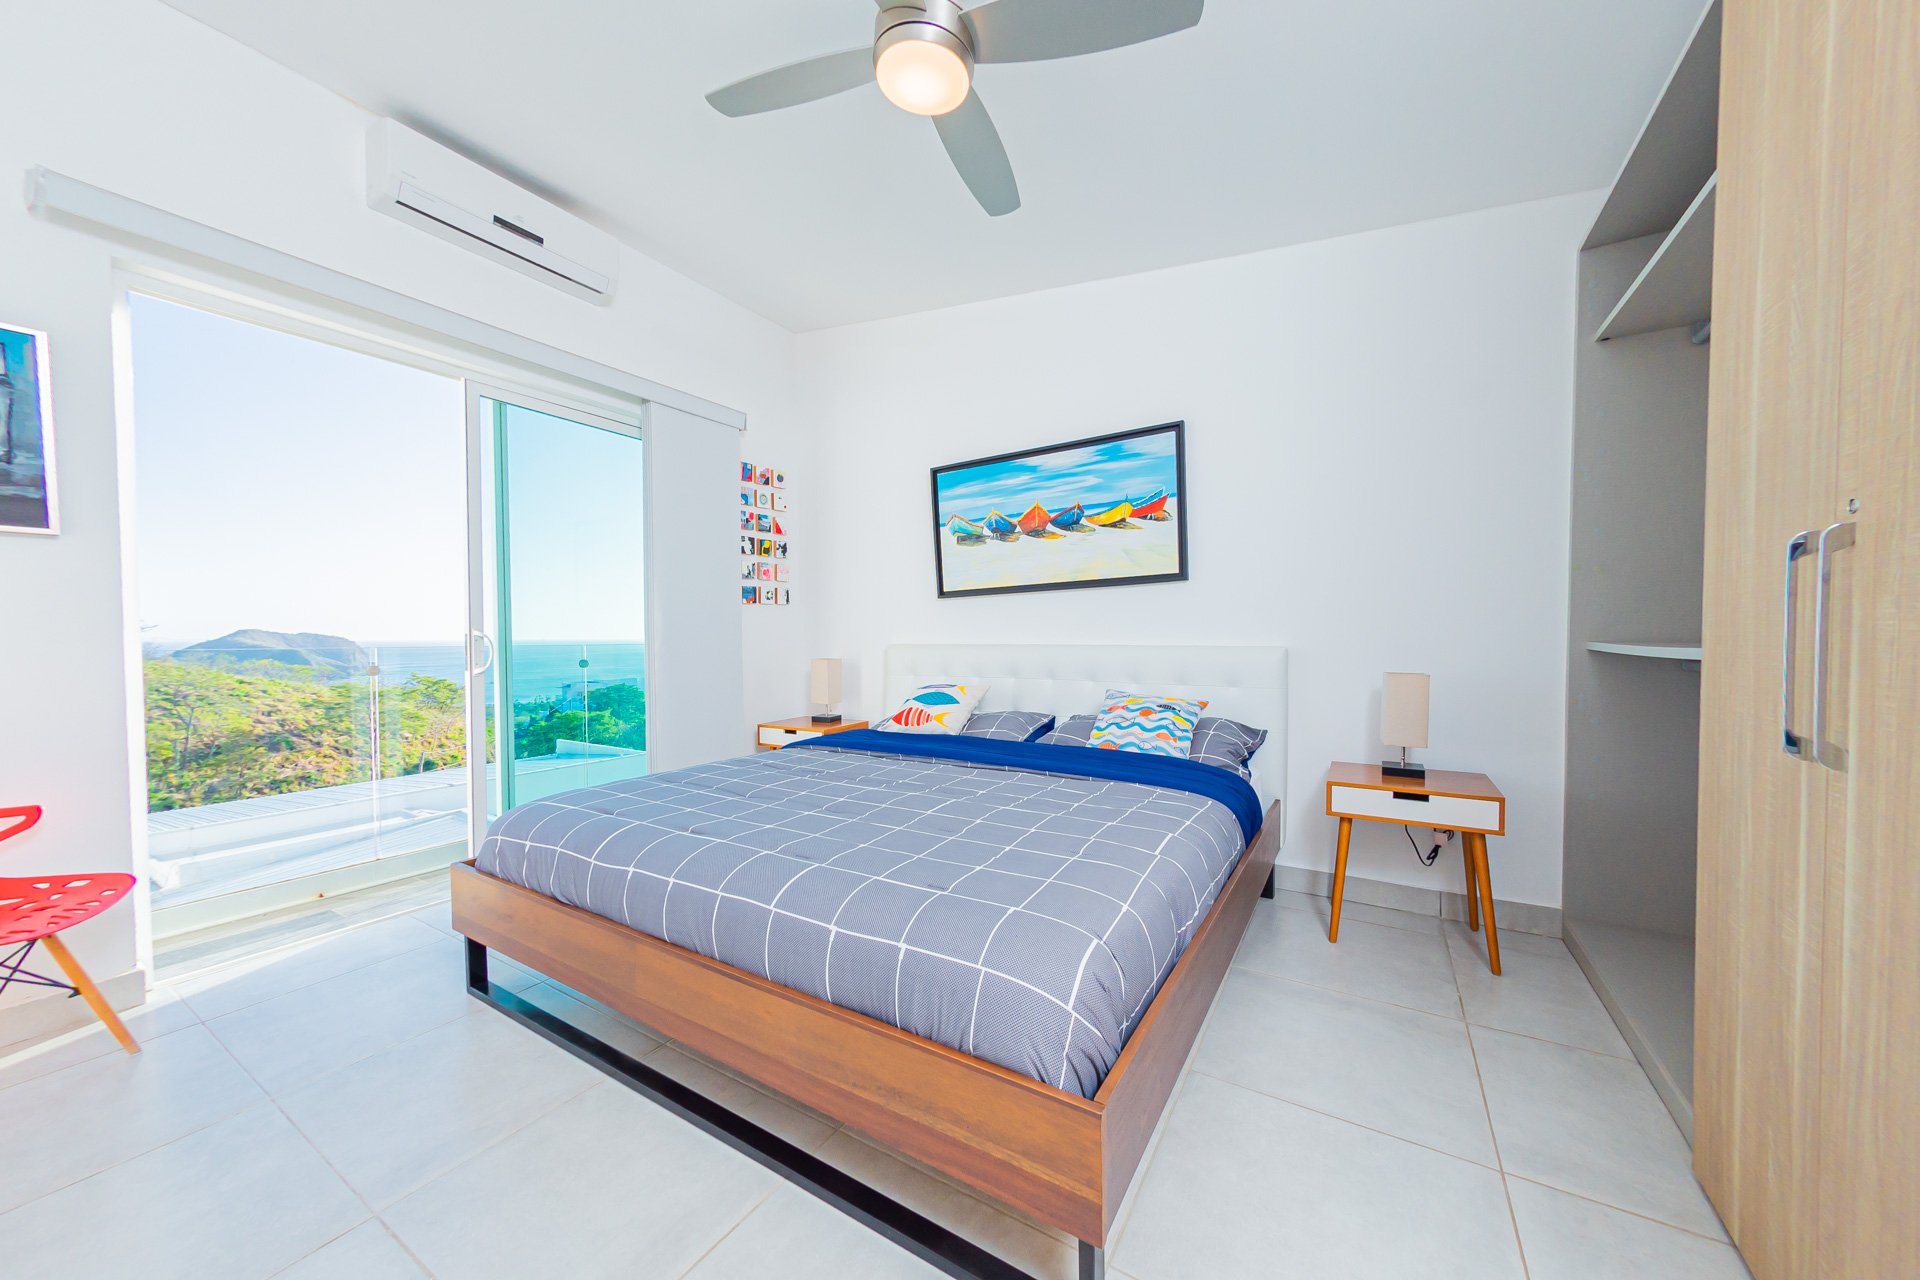 Five Bedroom Luxury Home For Sale San Juan Del Sur Nicaragua 30.JPG